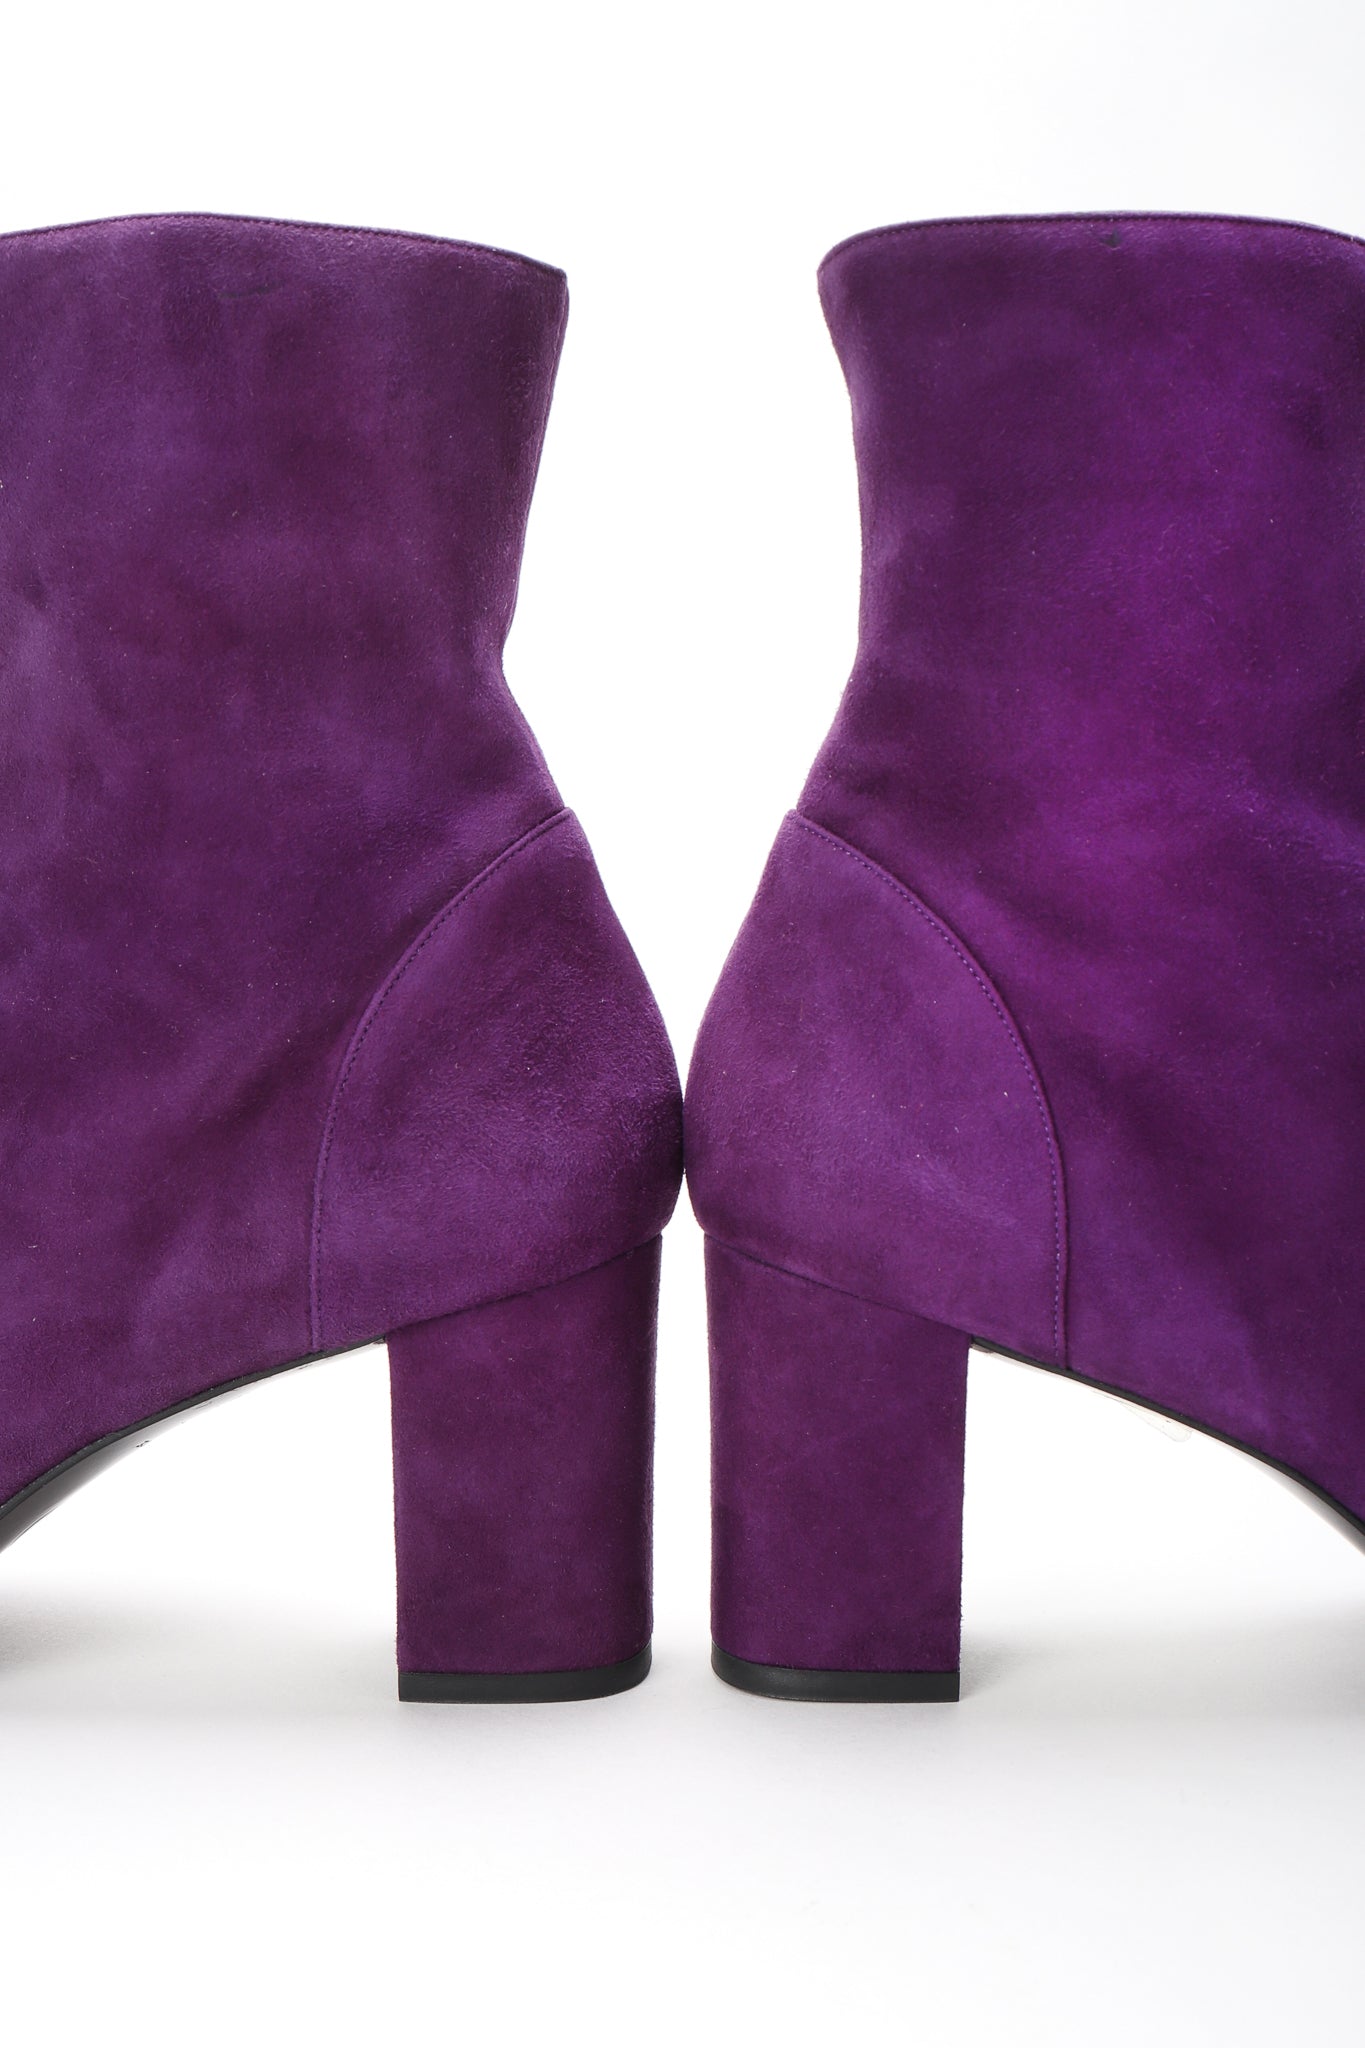 Recess Designer Consignment Vintage Chanel Purple Suede Cap Toe Ankle Boots Los Angeles Resale